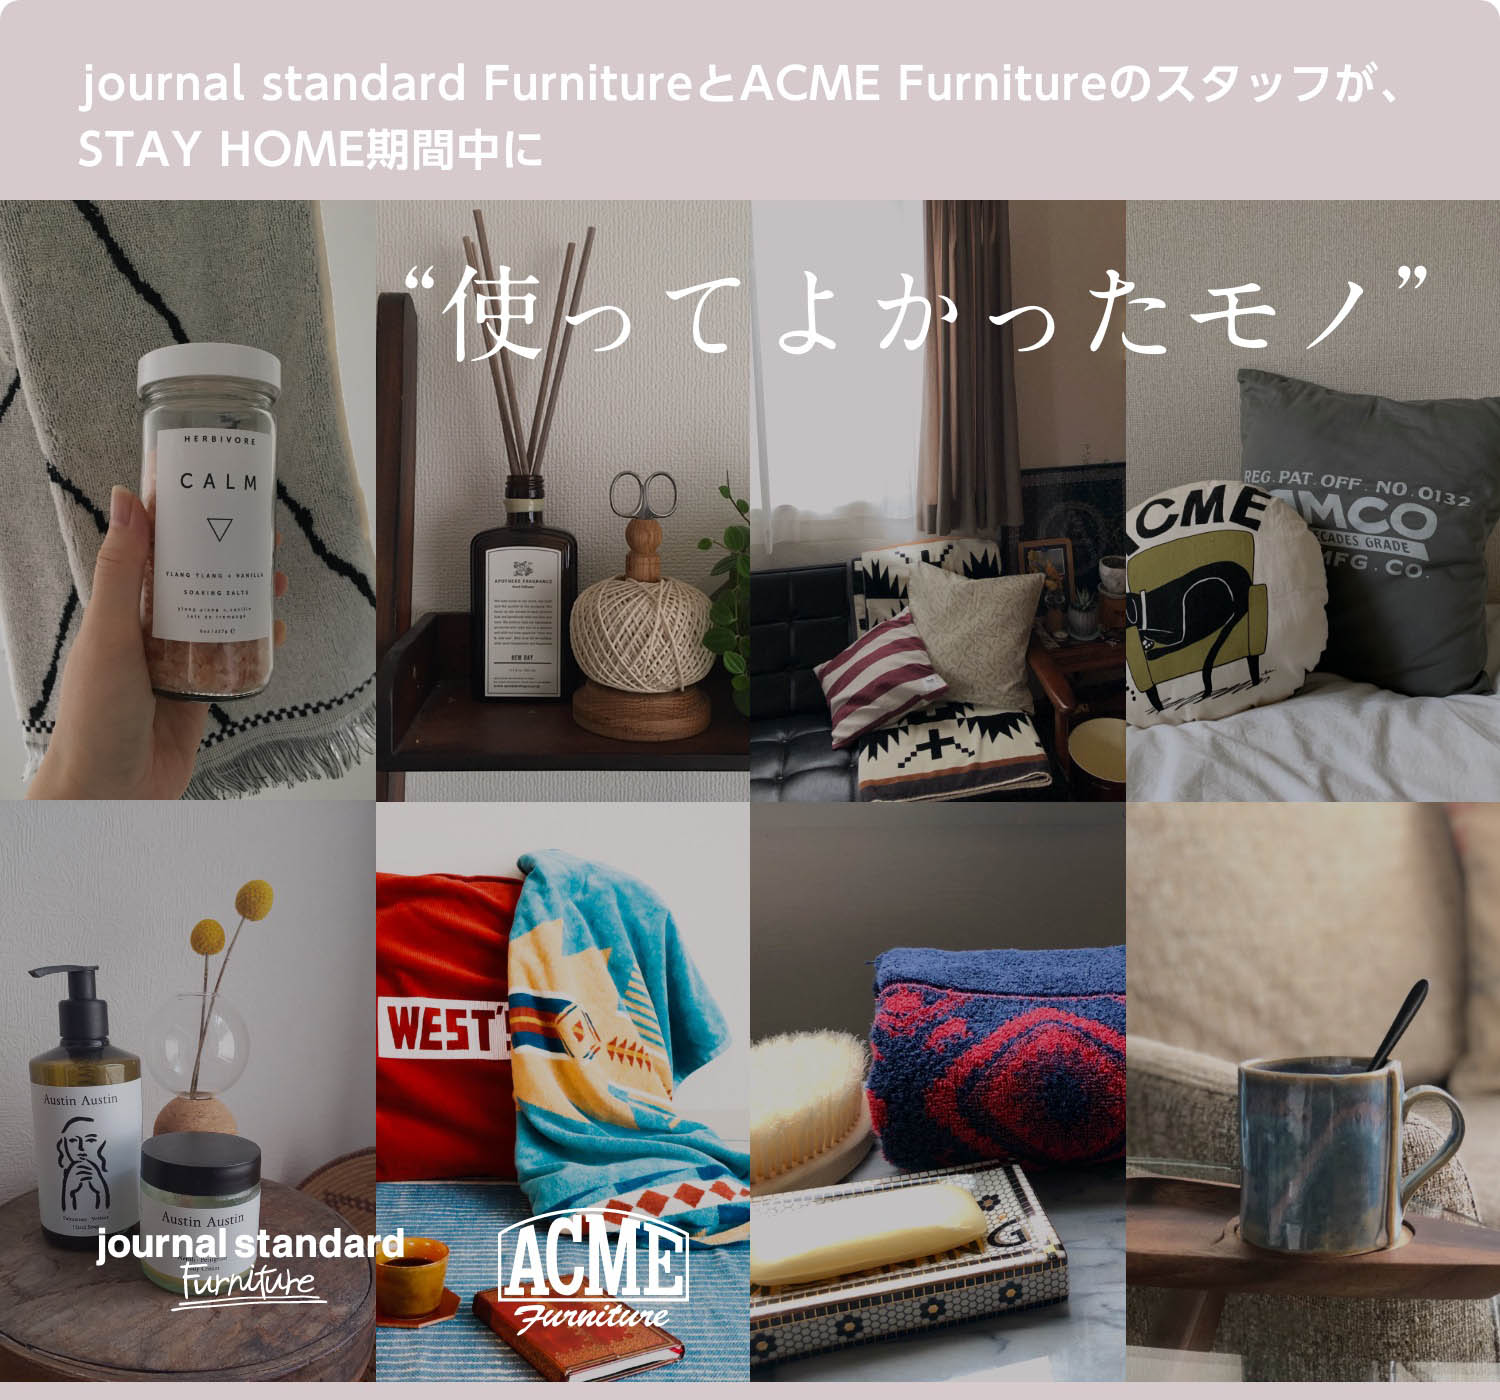 journal standard FurnitureとACME FurnitureのスタッフがSTAY HOME 